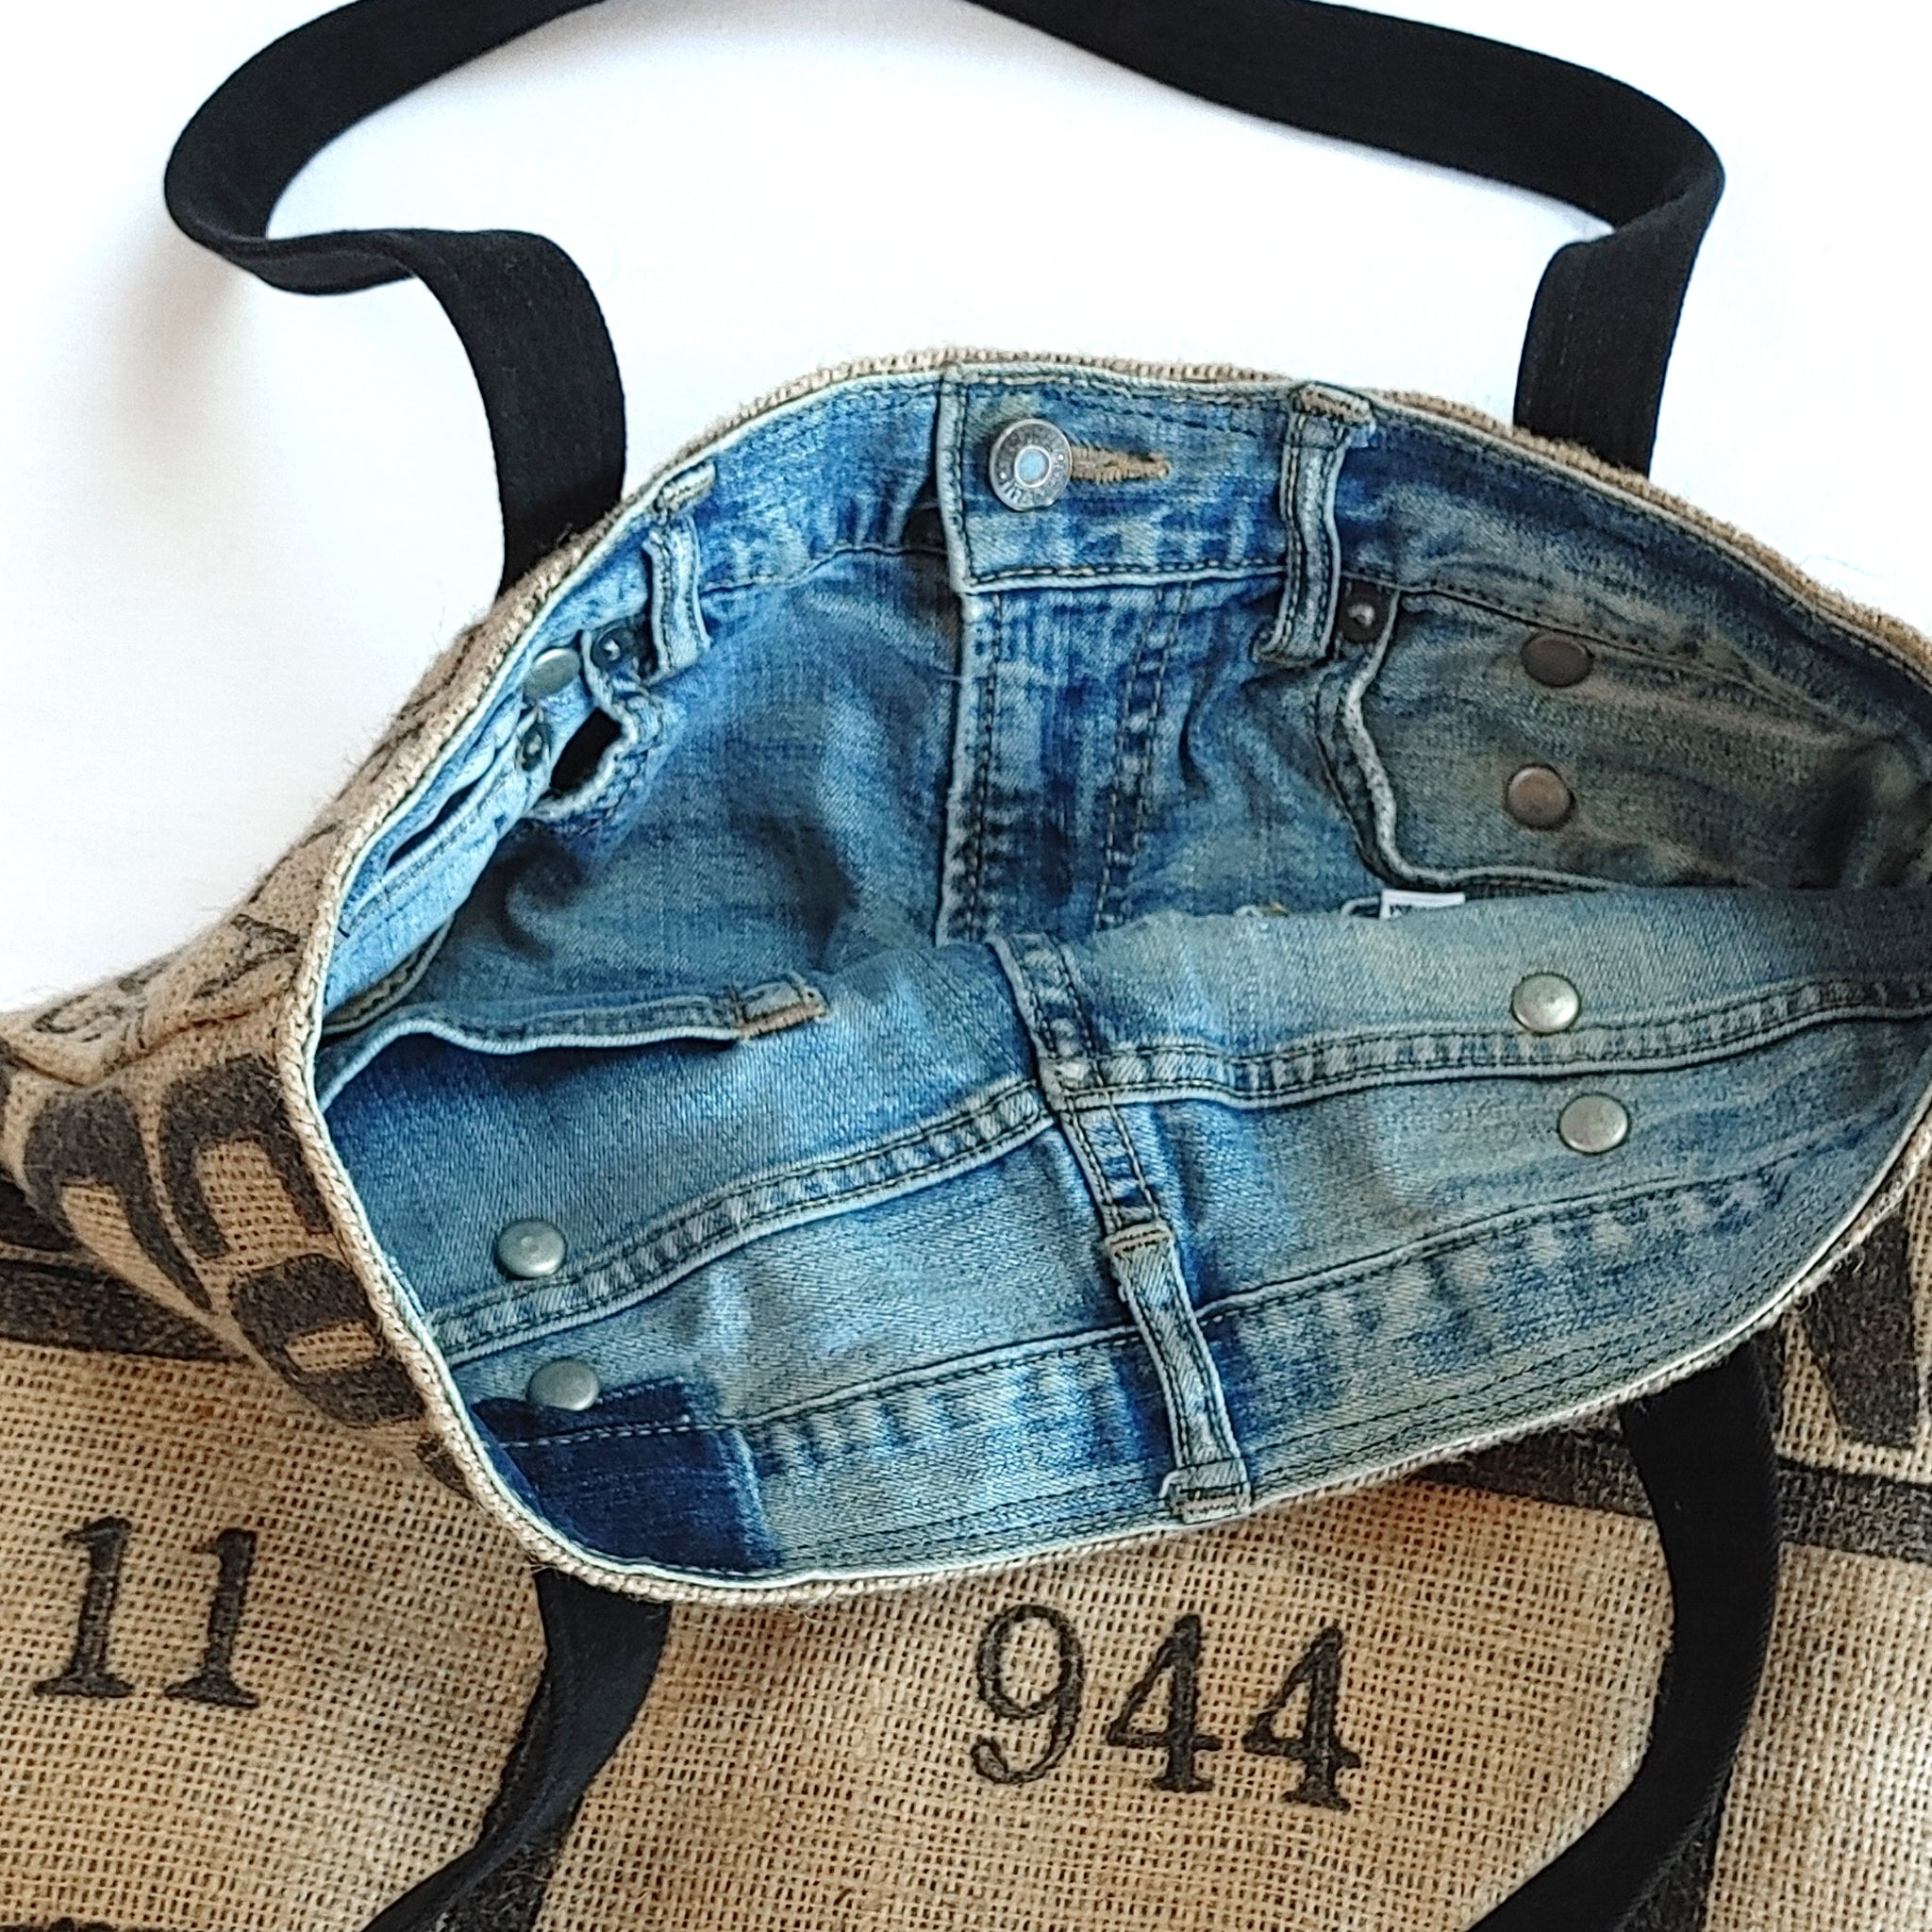 Market Tote Bag – Denim Jeans Interior